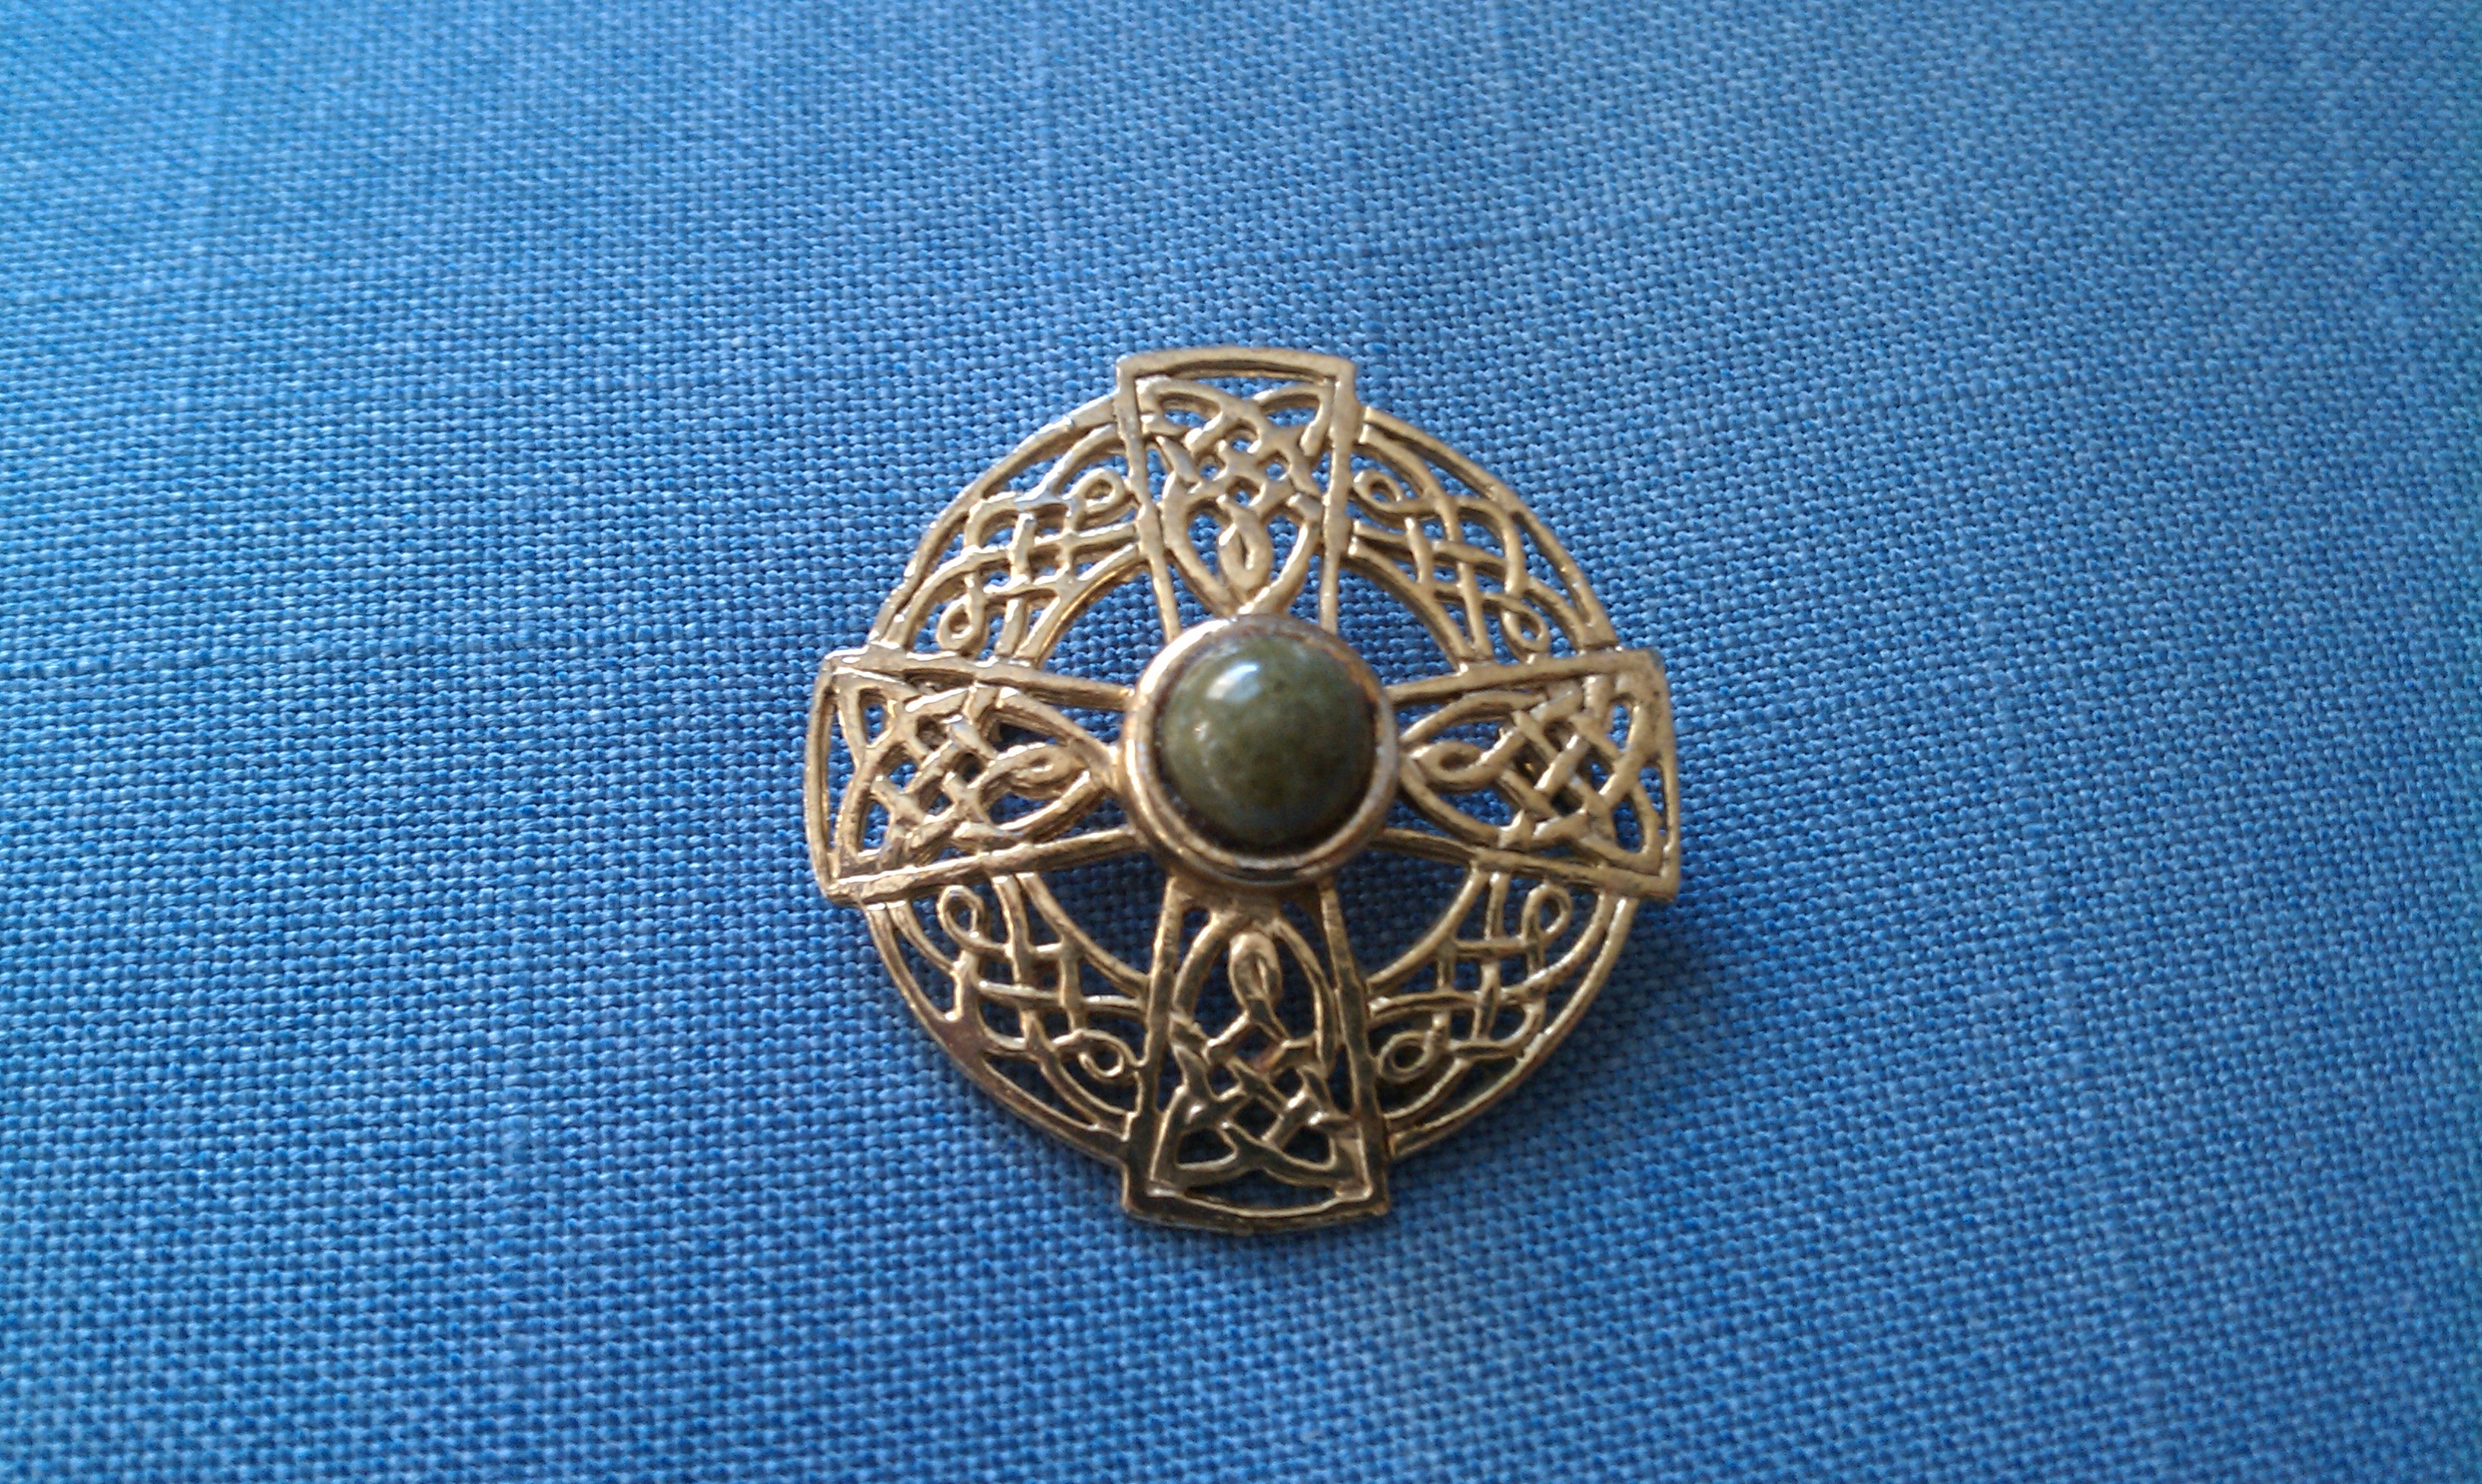 My grandmother's Celtic cross pin